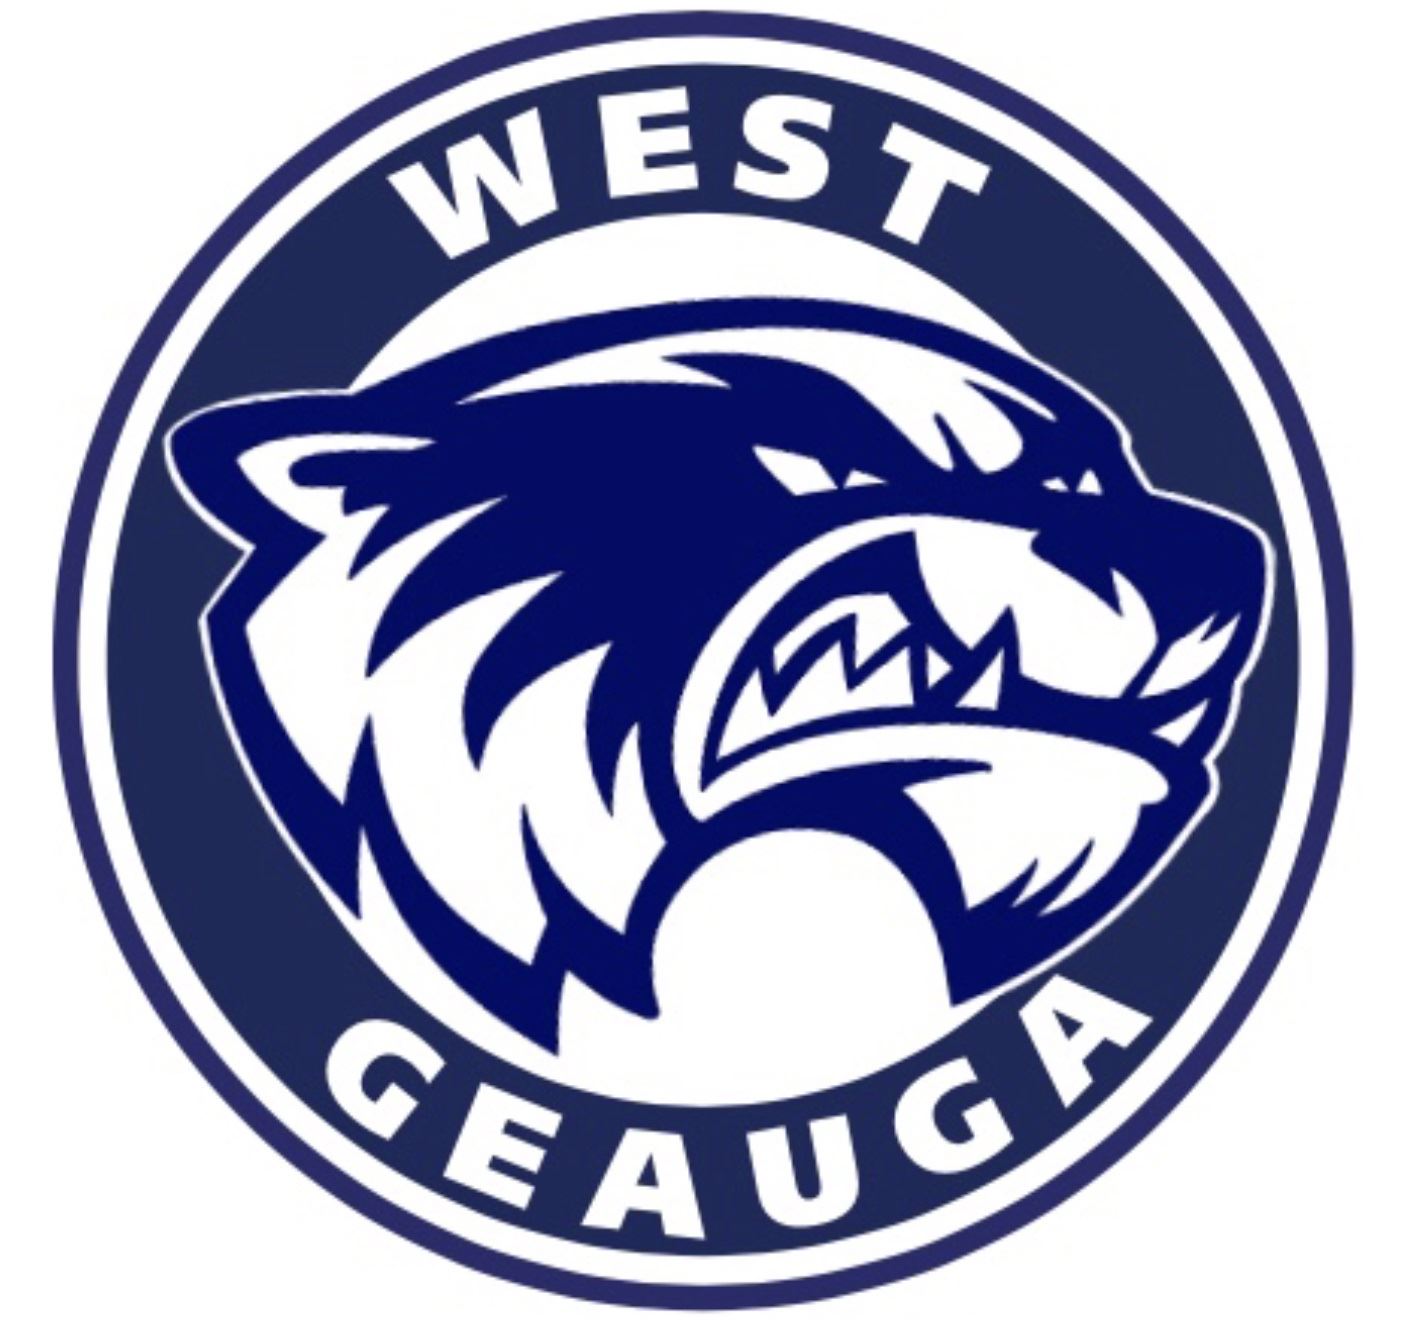 West Geauga High School